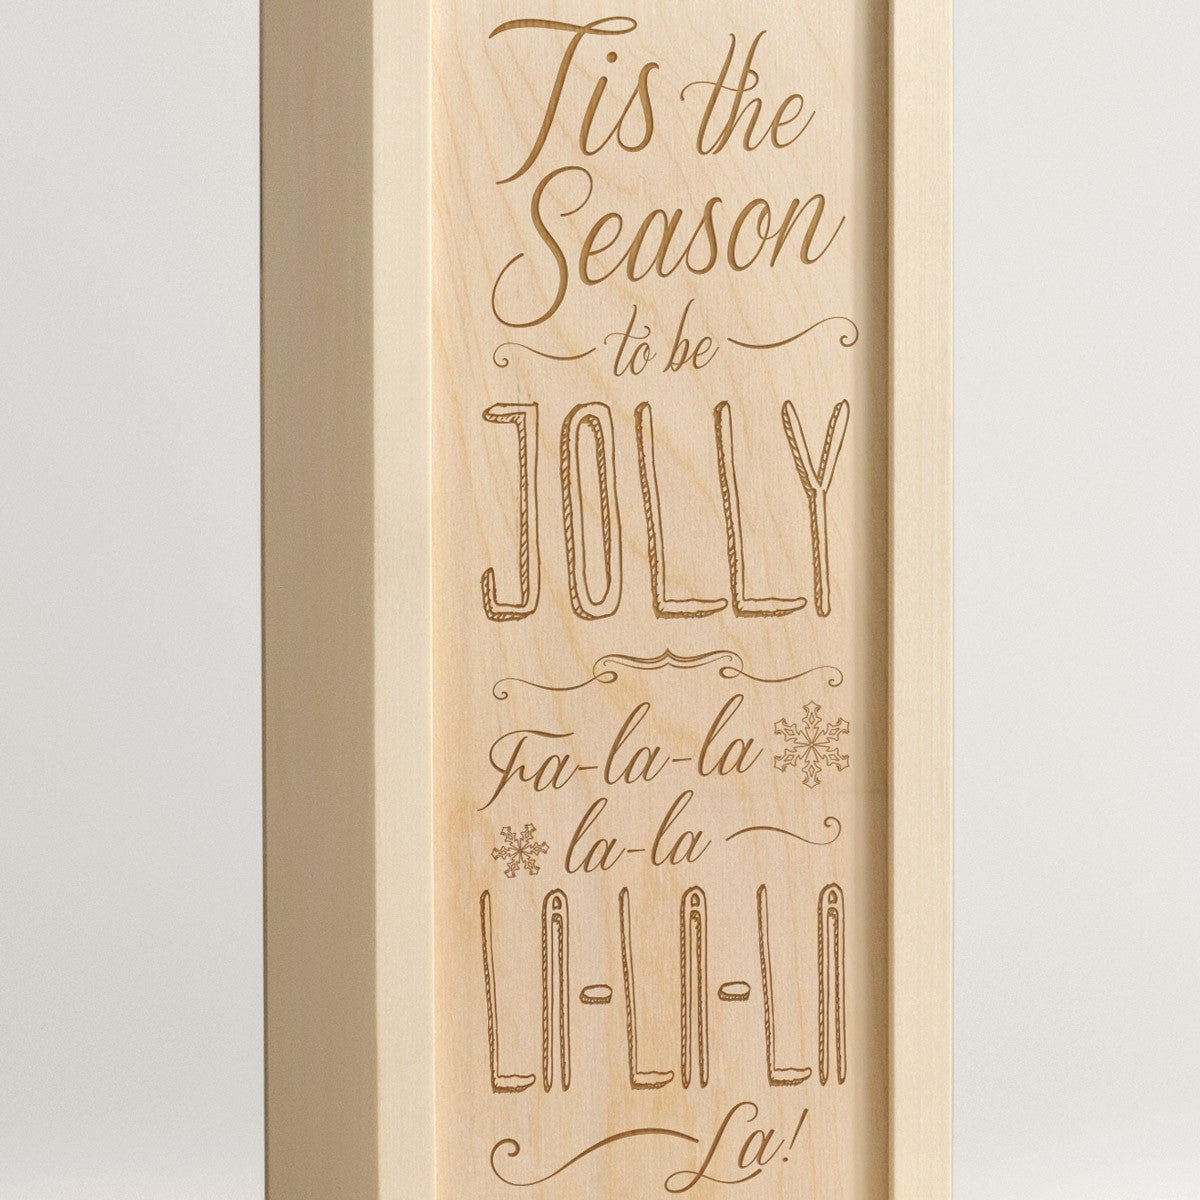 Tis The Season - Christmas Wine Box - Detail Image